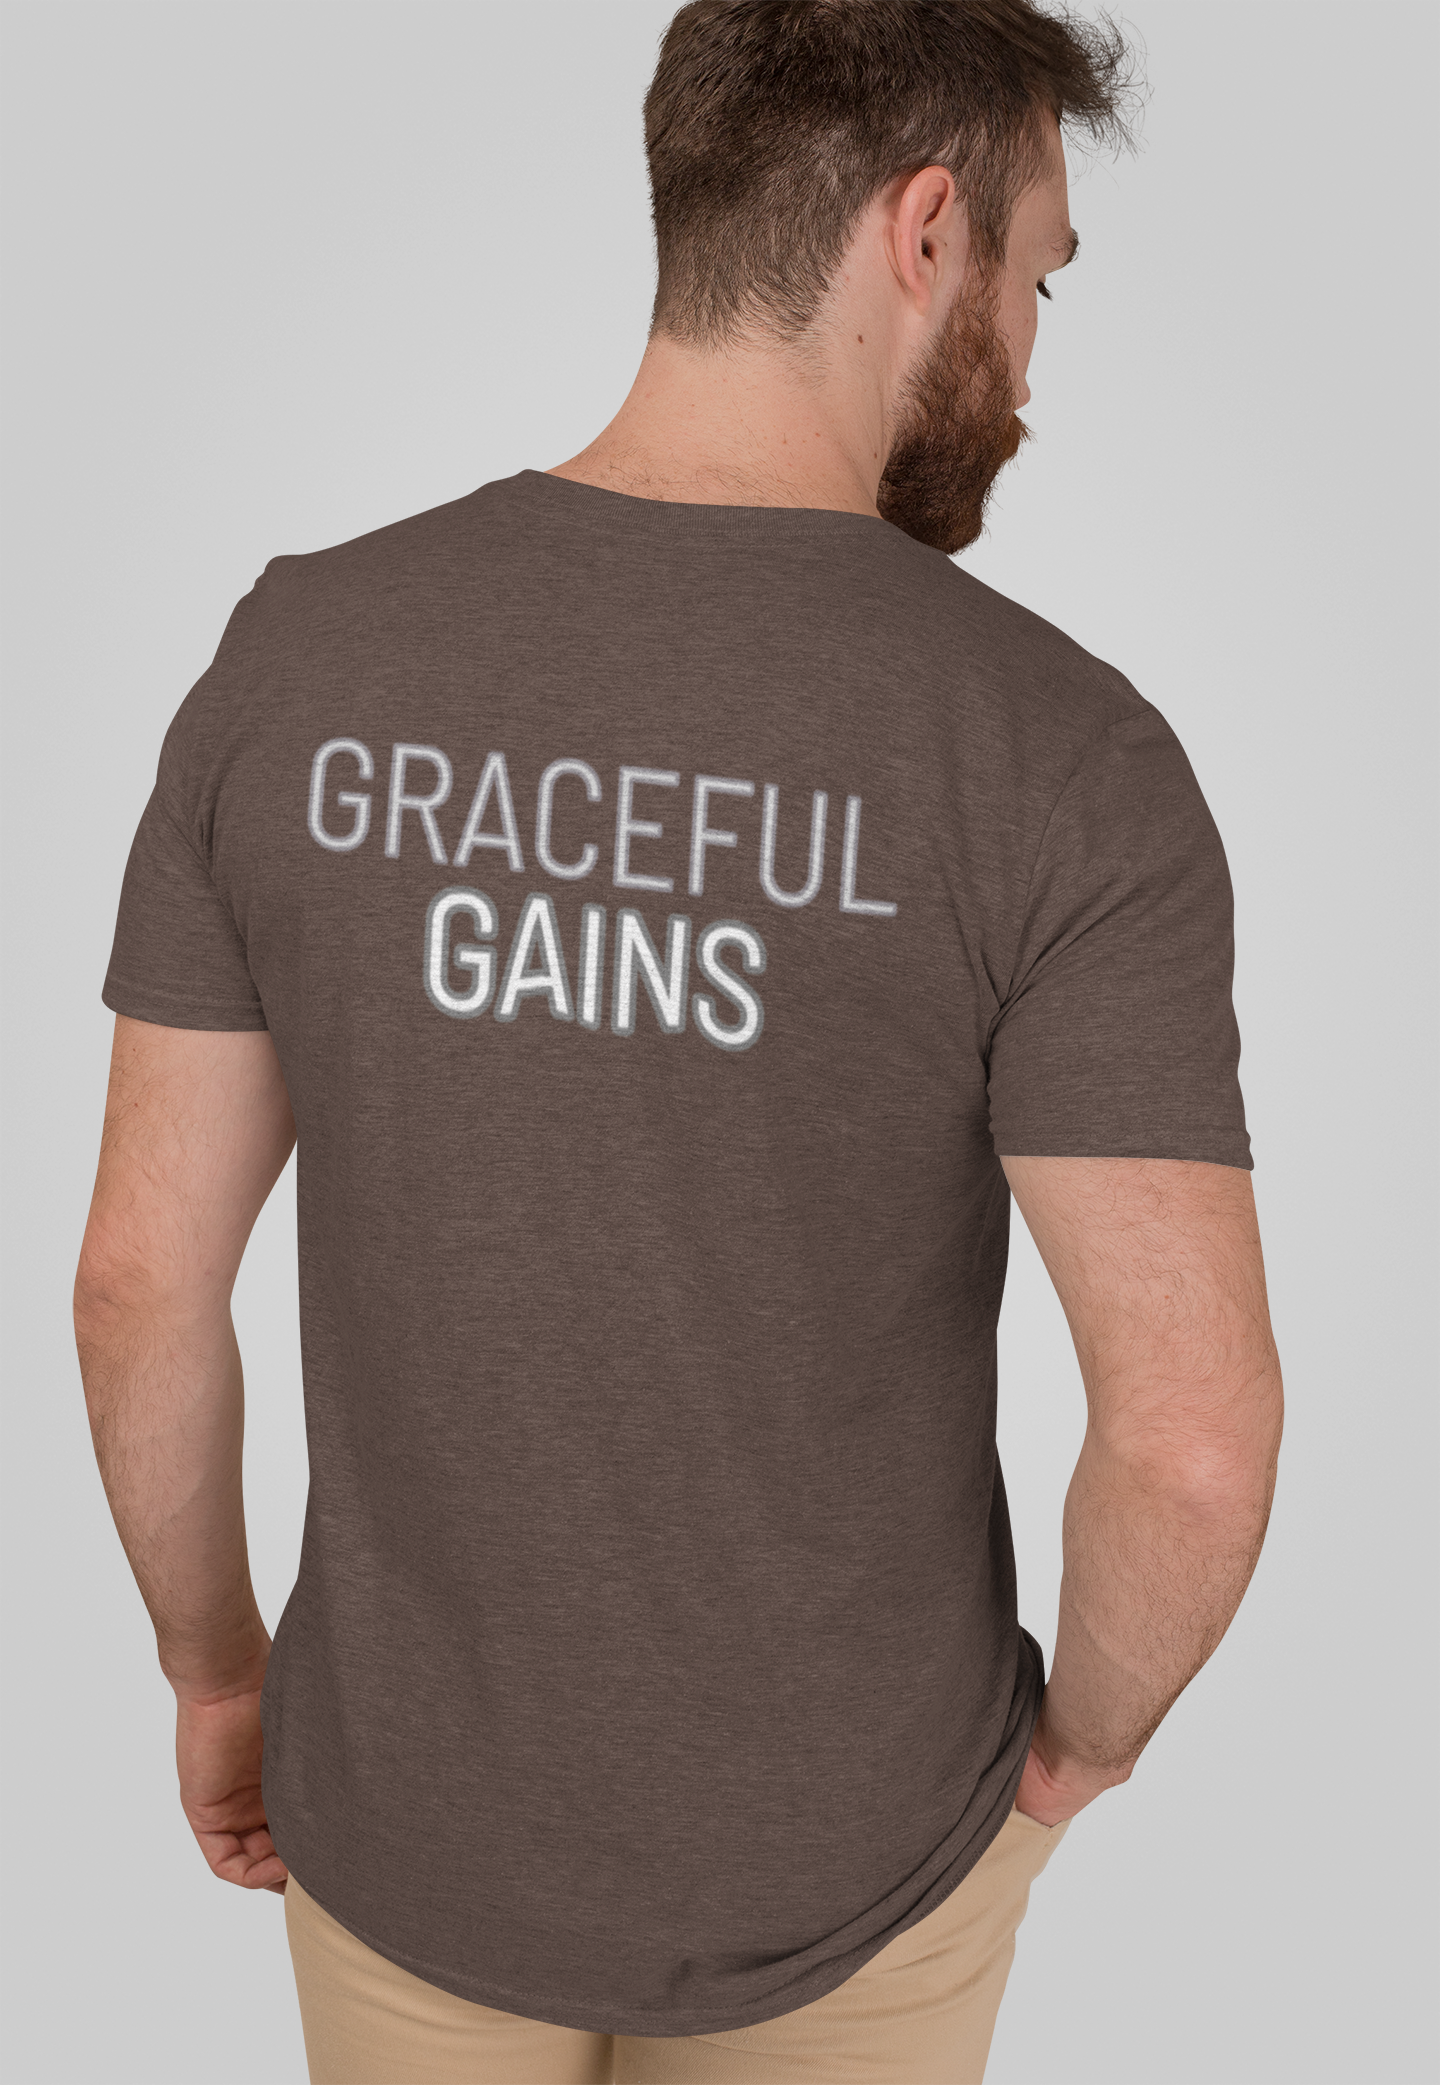 Graceful Gains